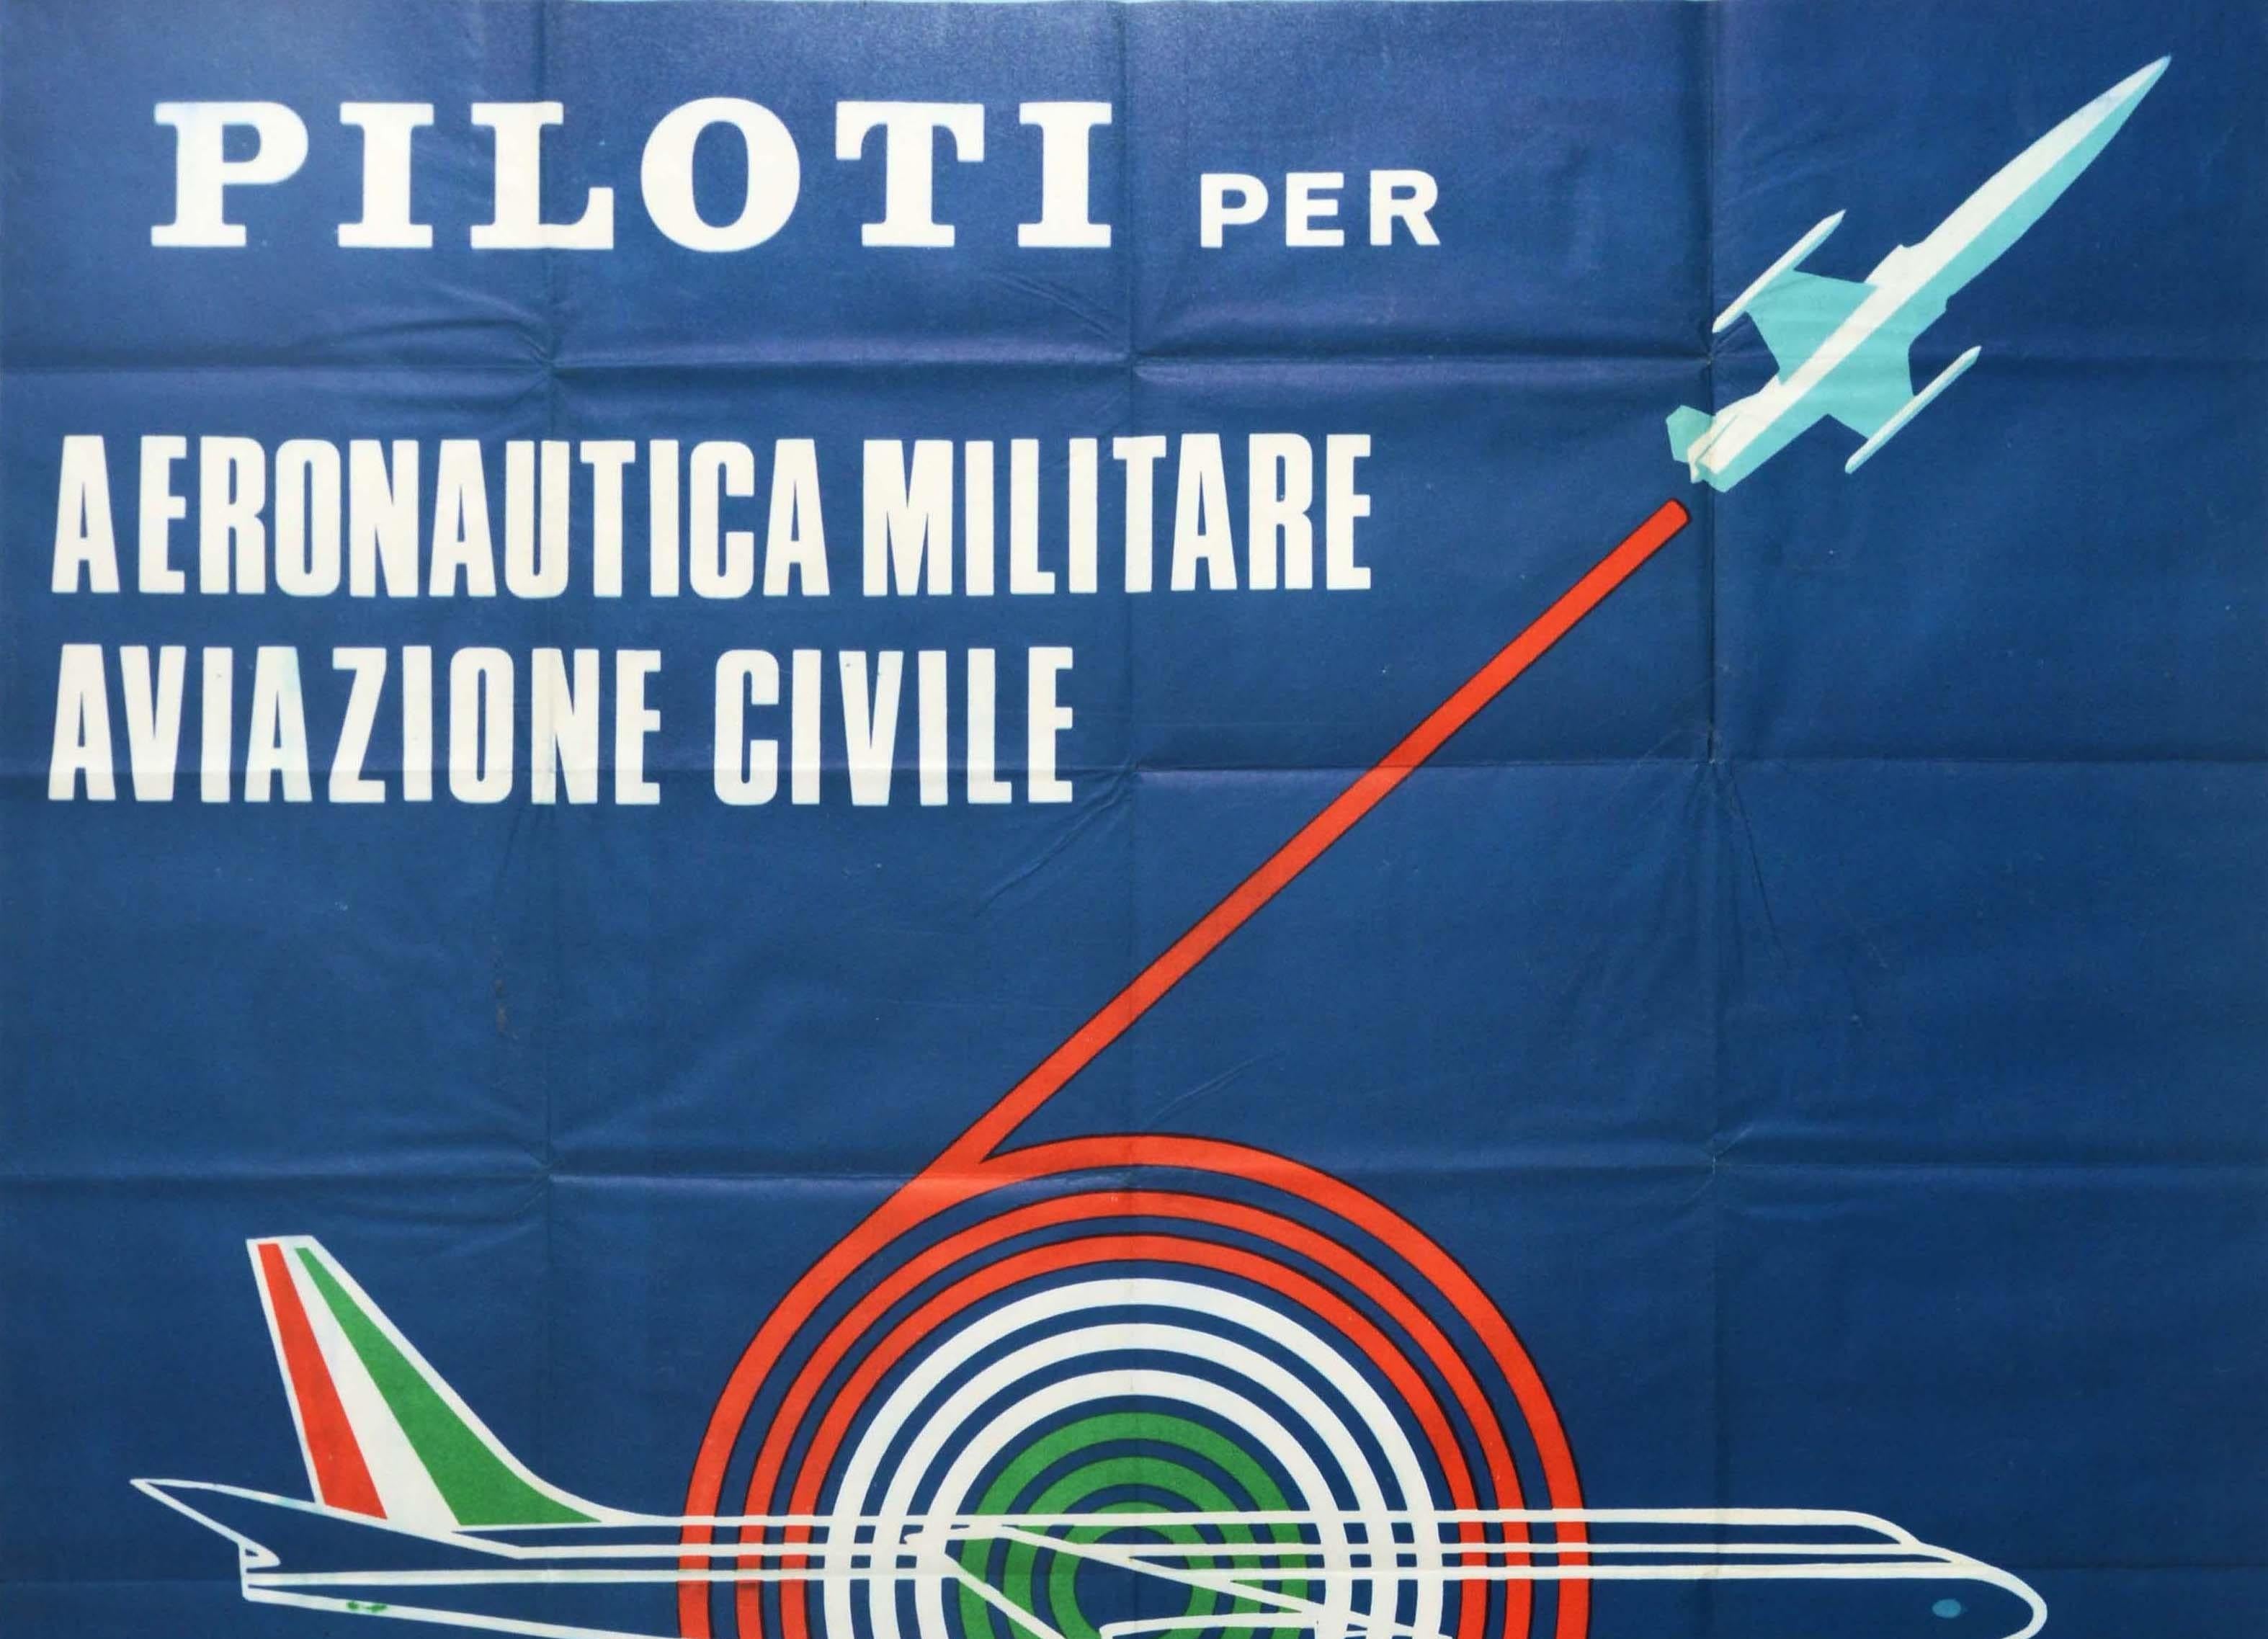 Original Vintage Poster Pilot Recruitment Civil Aviation Italy Air Force Piloti - Print by Masserotti